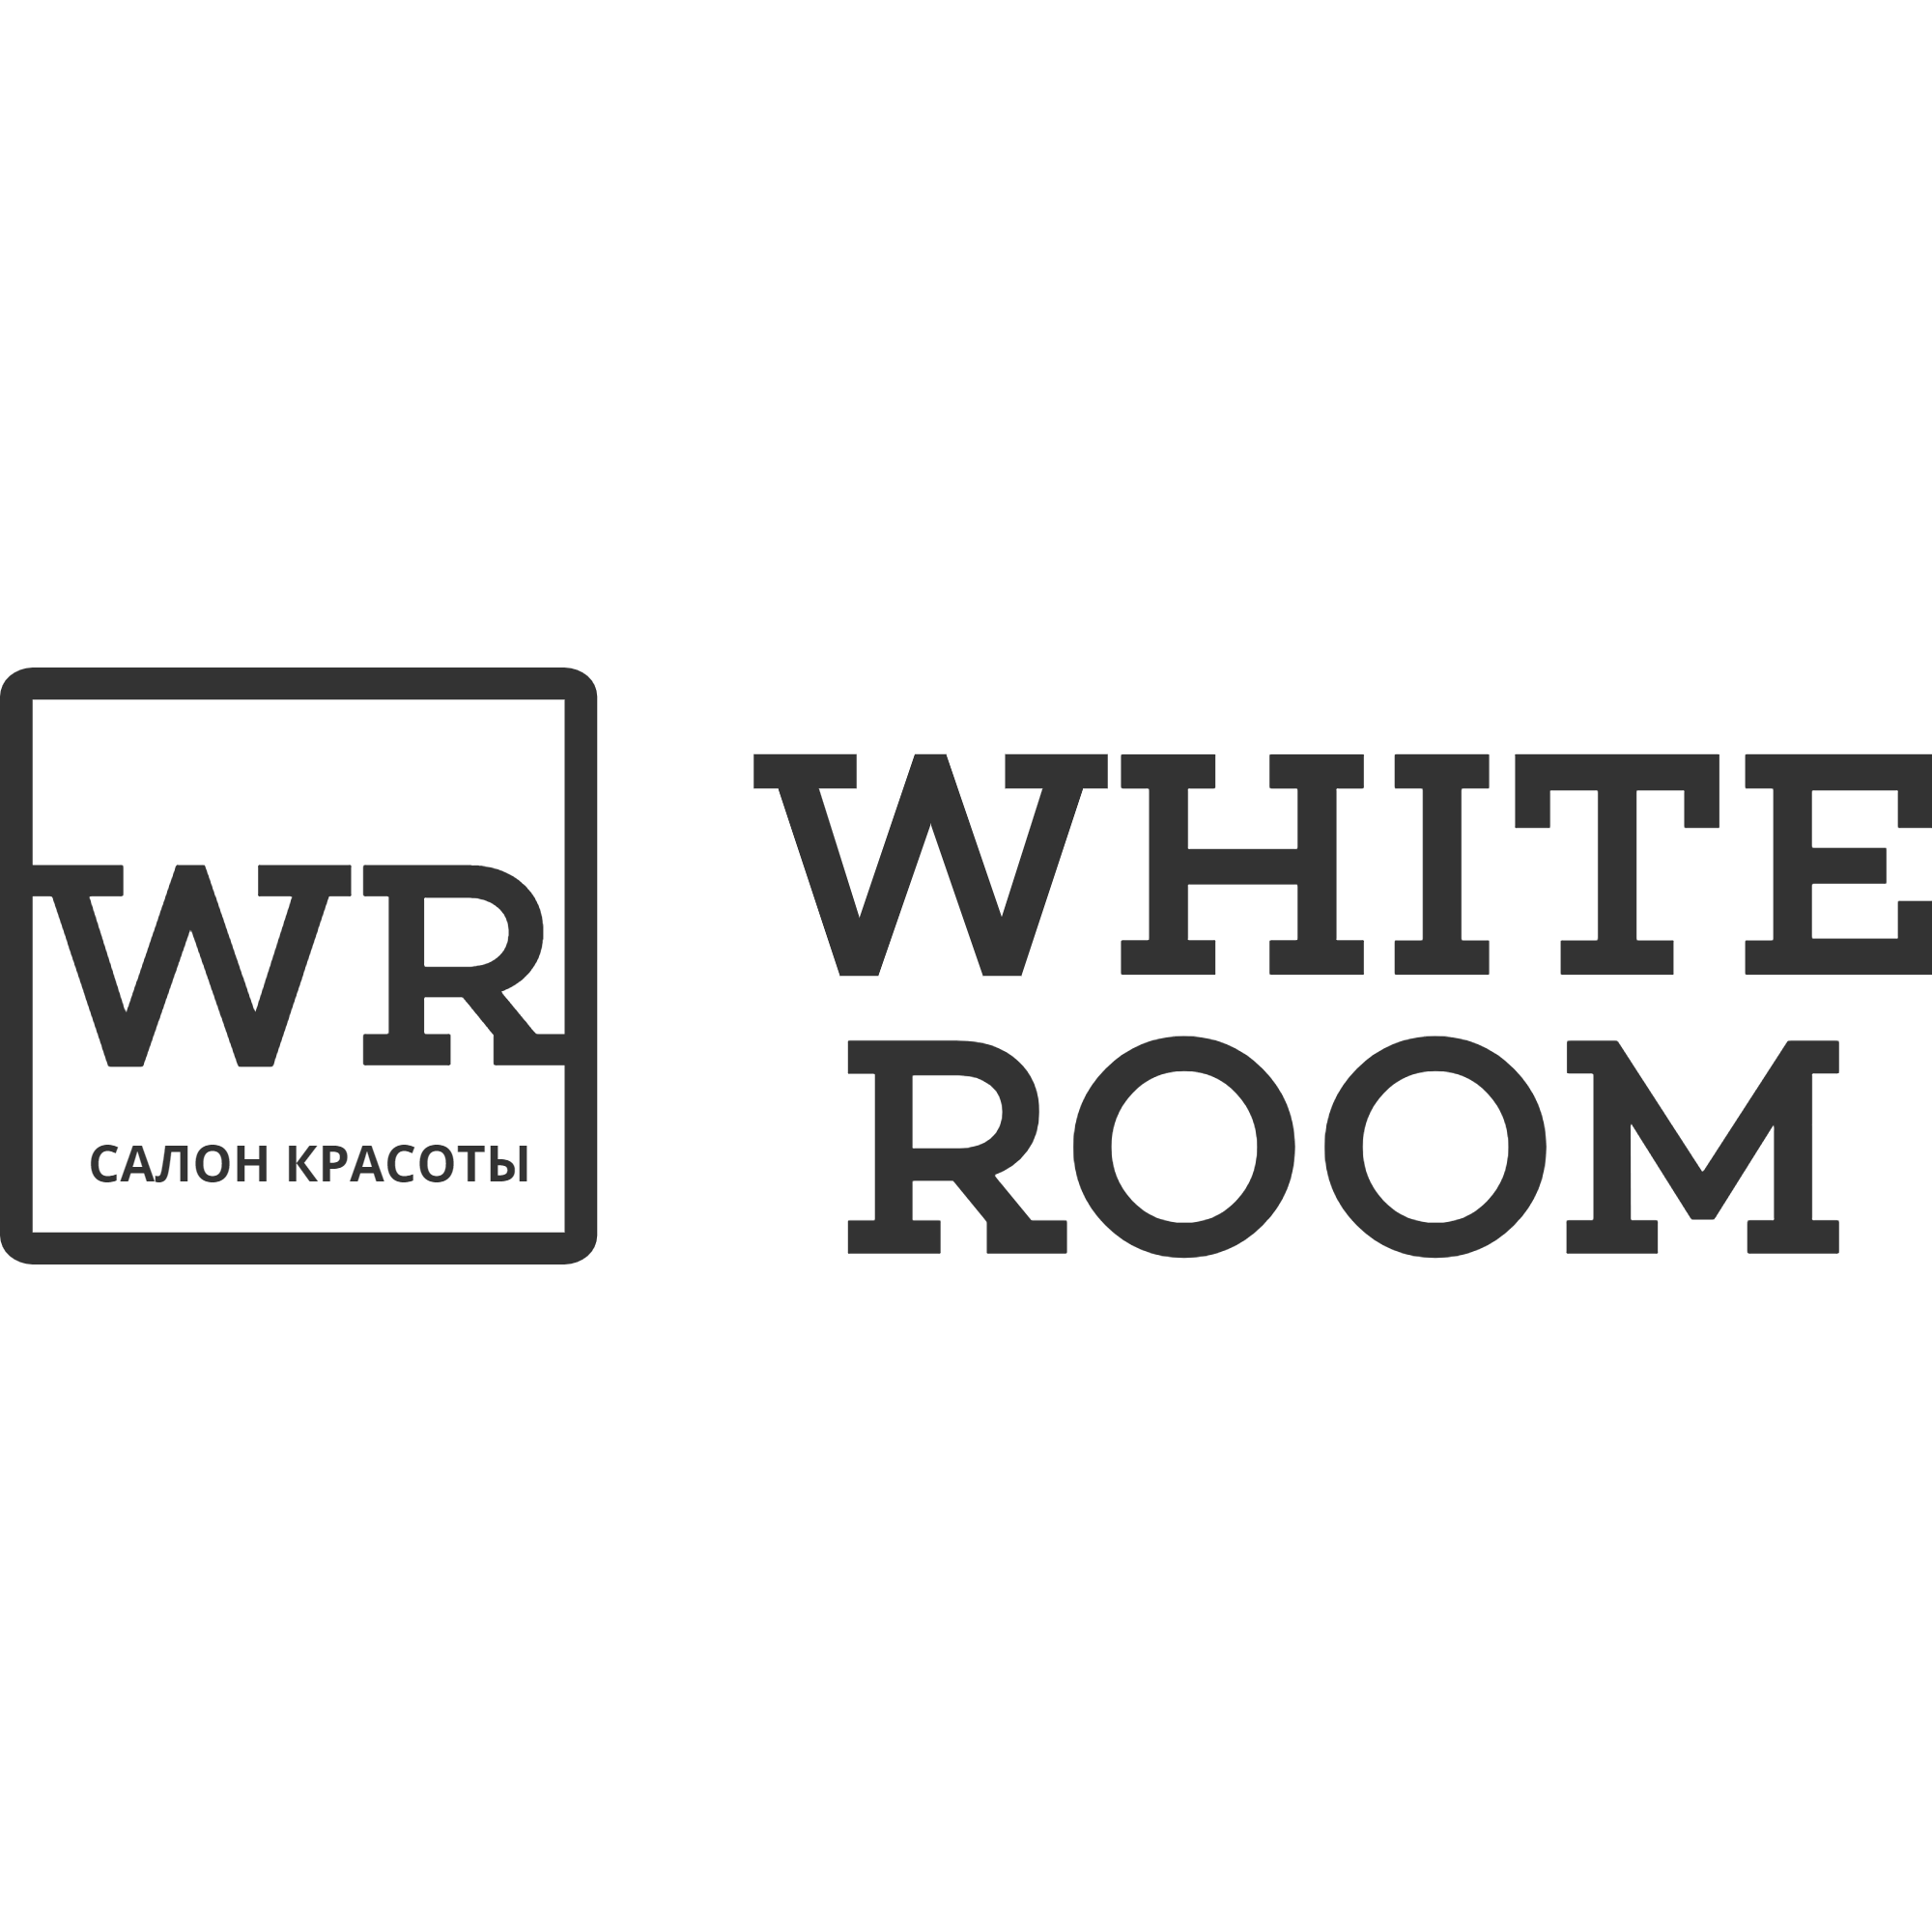 Rooms новосибирск. White Room Новосибирск. White Room logo. Аянакоджи Вайт рум. Вайт рум сантехника вывеска.